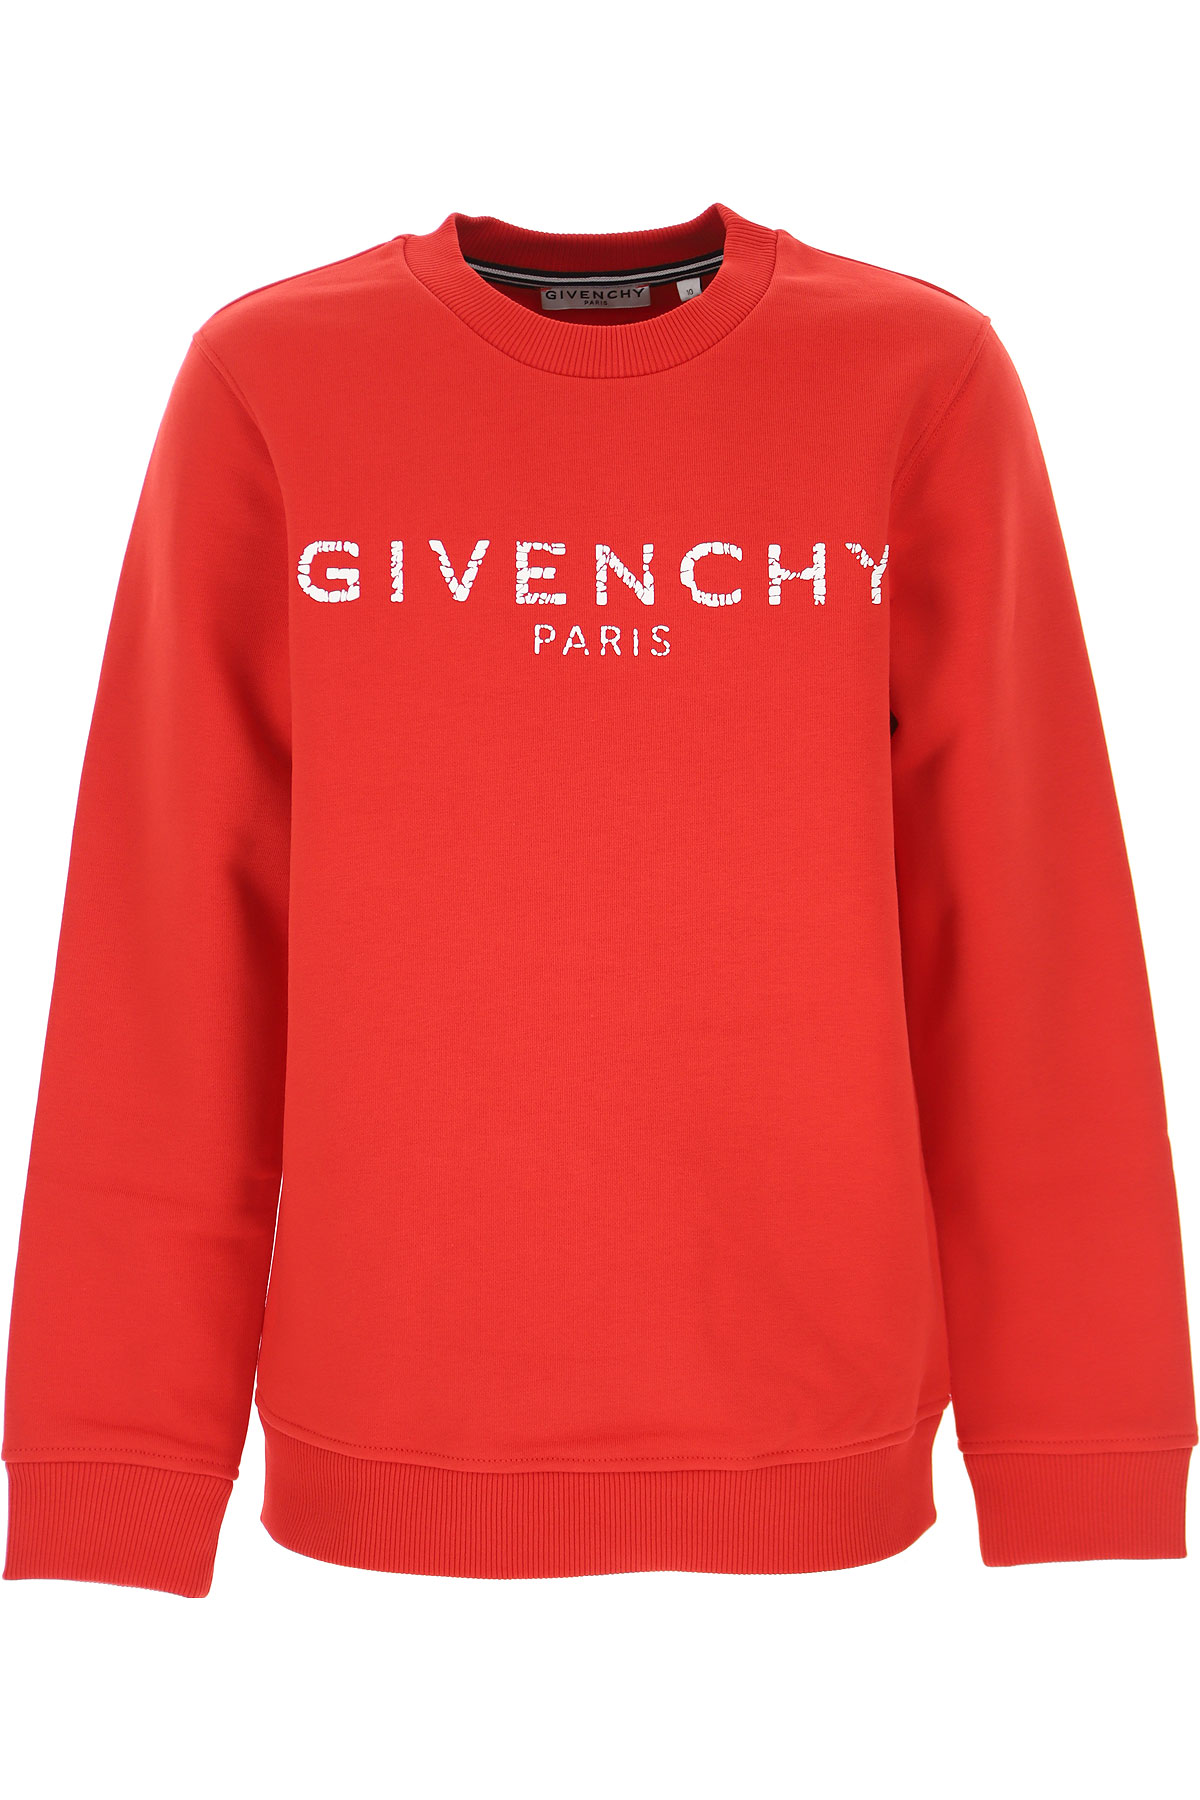 Kidswear Givenchy, Style code: h25-j45-991